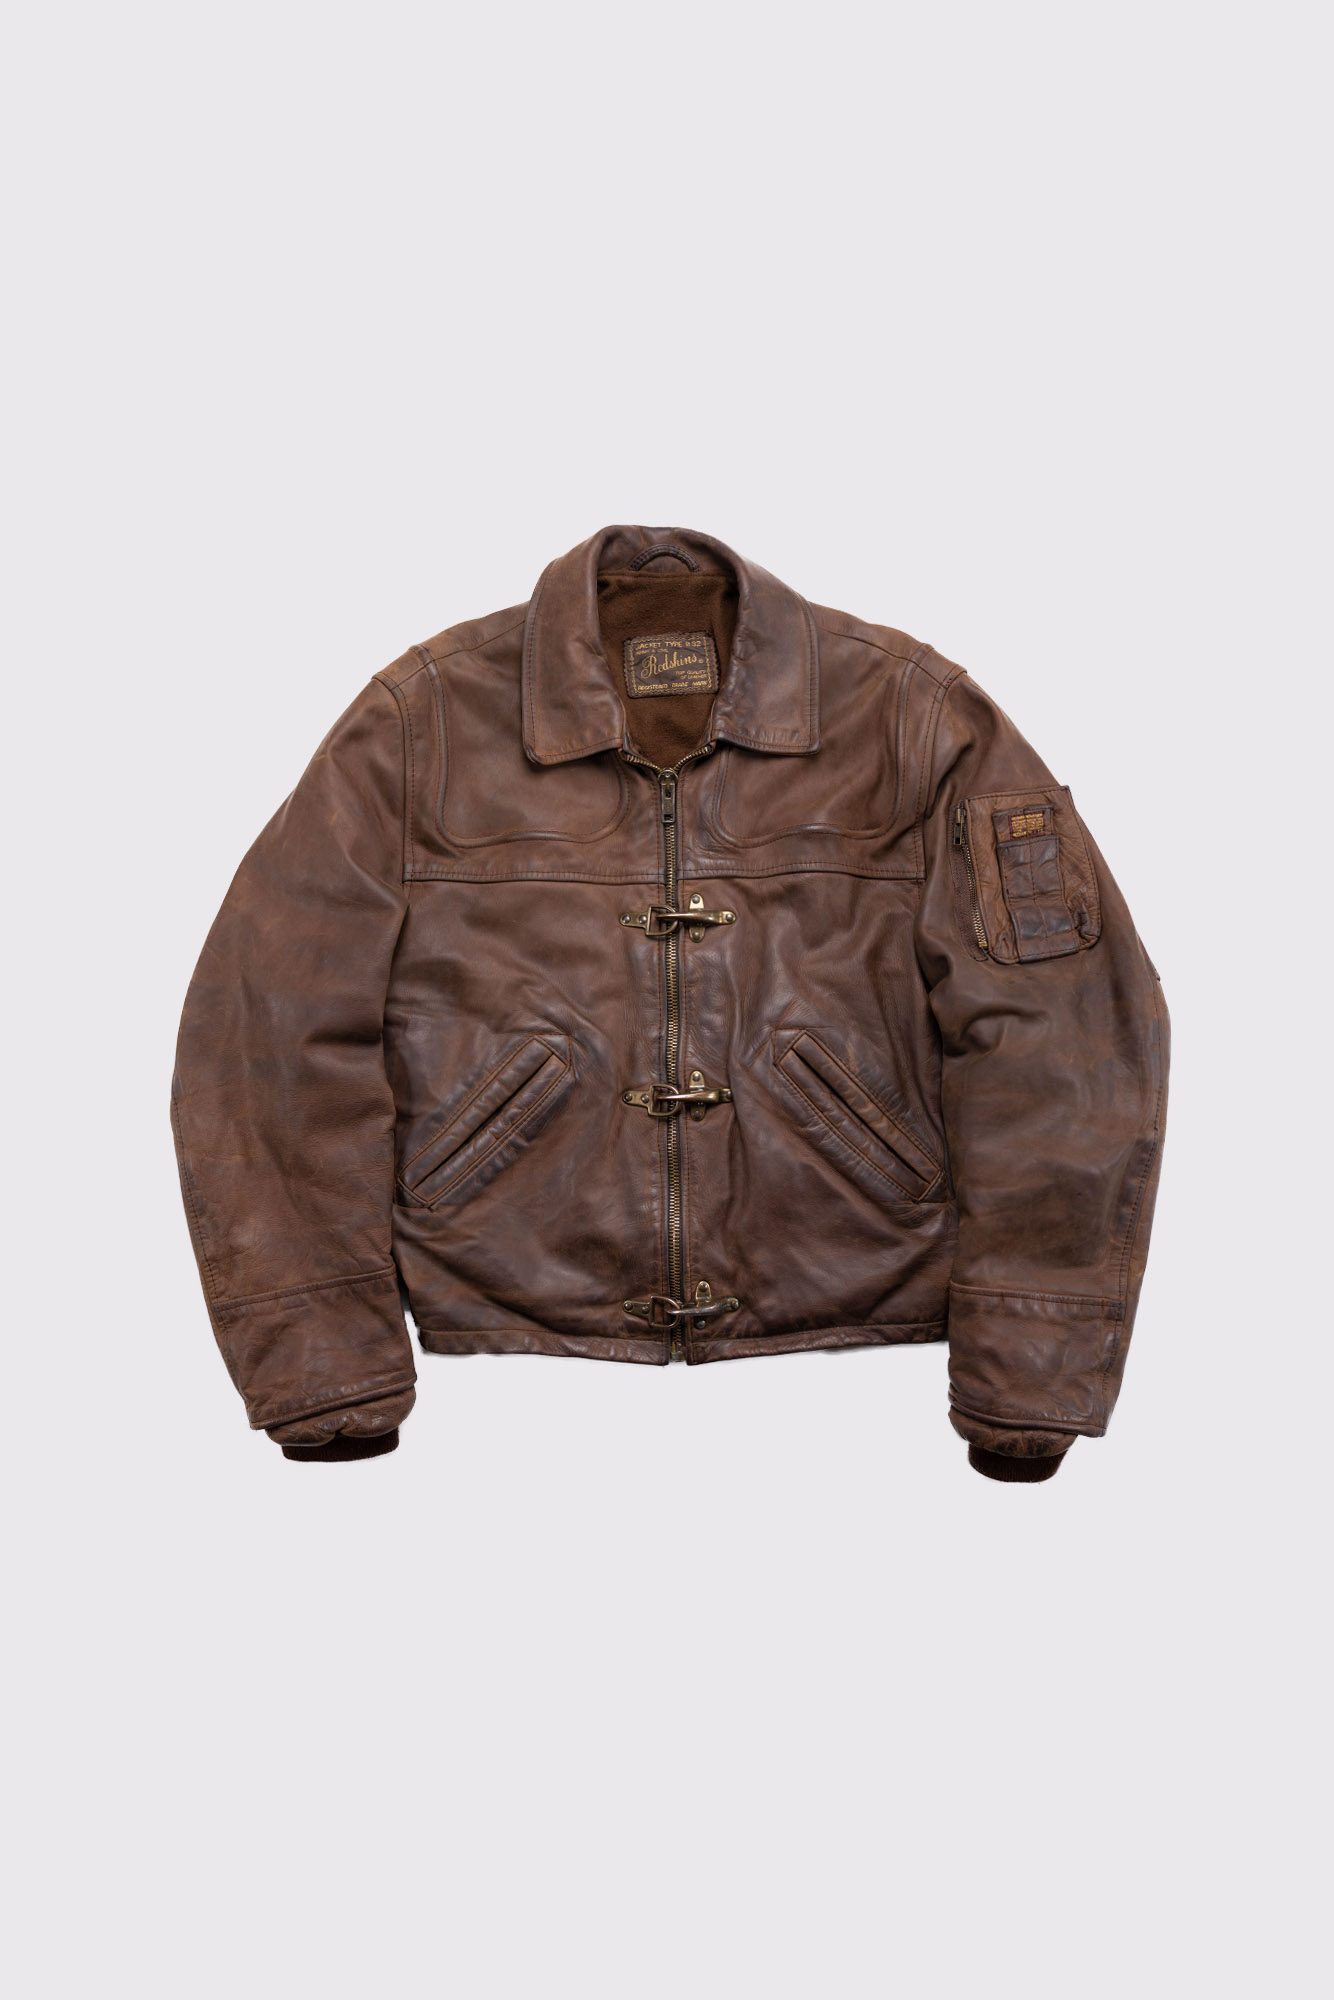 80s Redskins Leather Jacket - Die Schleuse